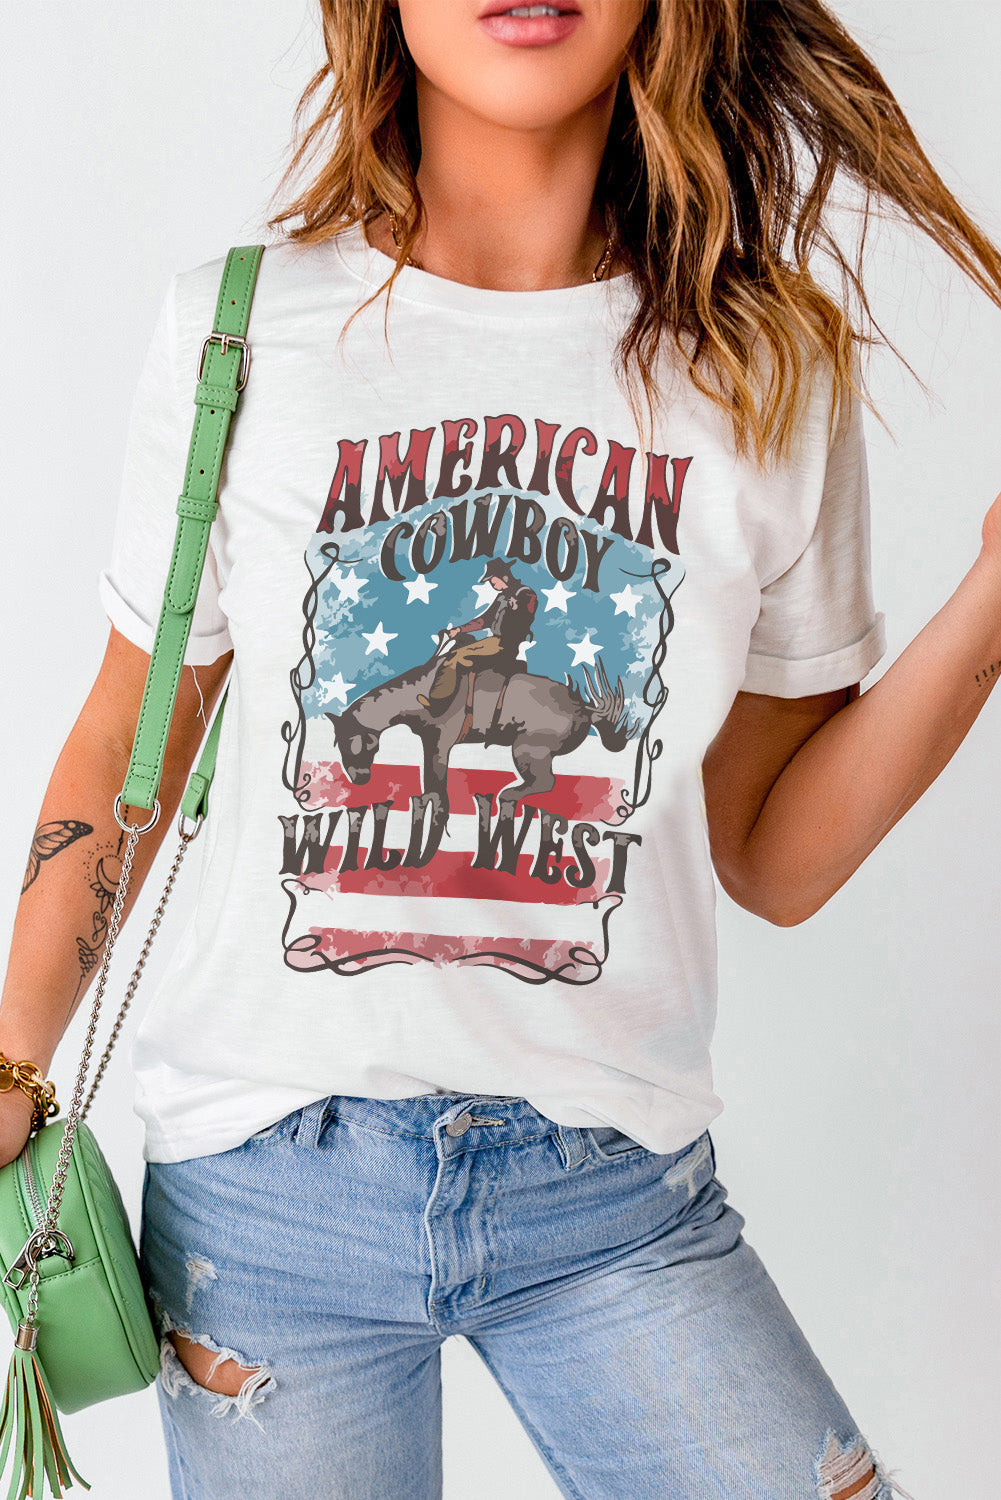 AMERICAN COWBOY WILD WEST Tee Shirt